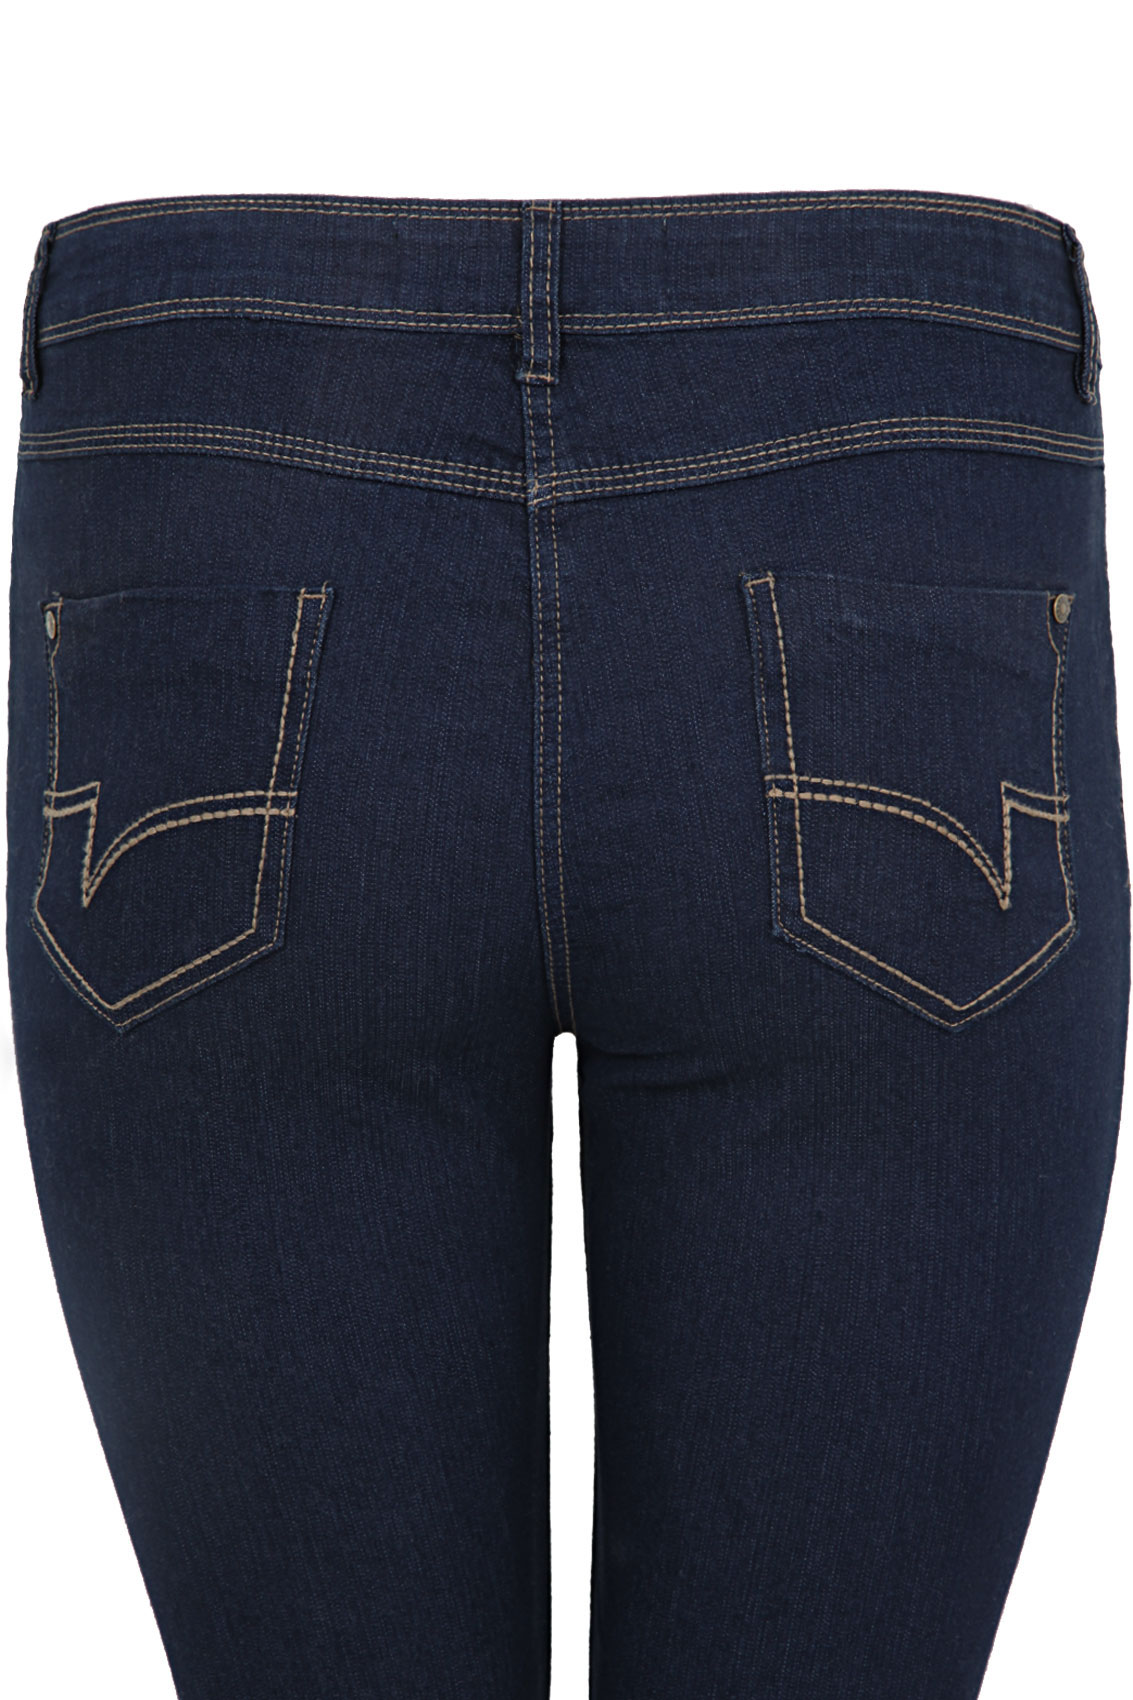 Indigo Straight Leg Jeans With Stitch Detail plus Size 16 to 32